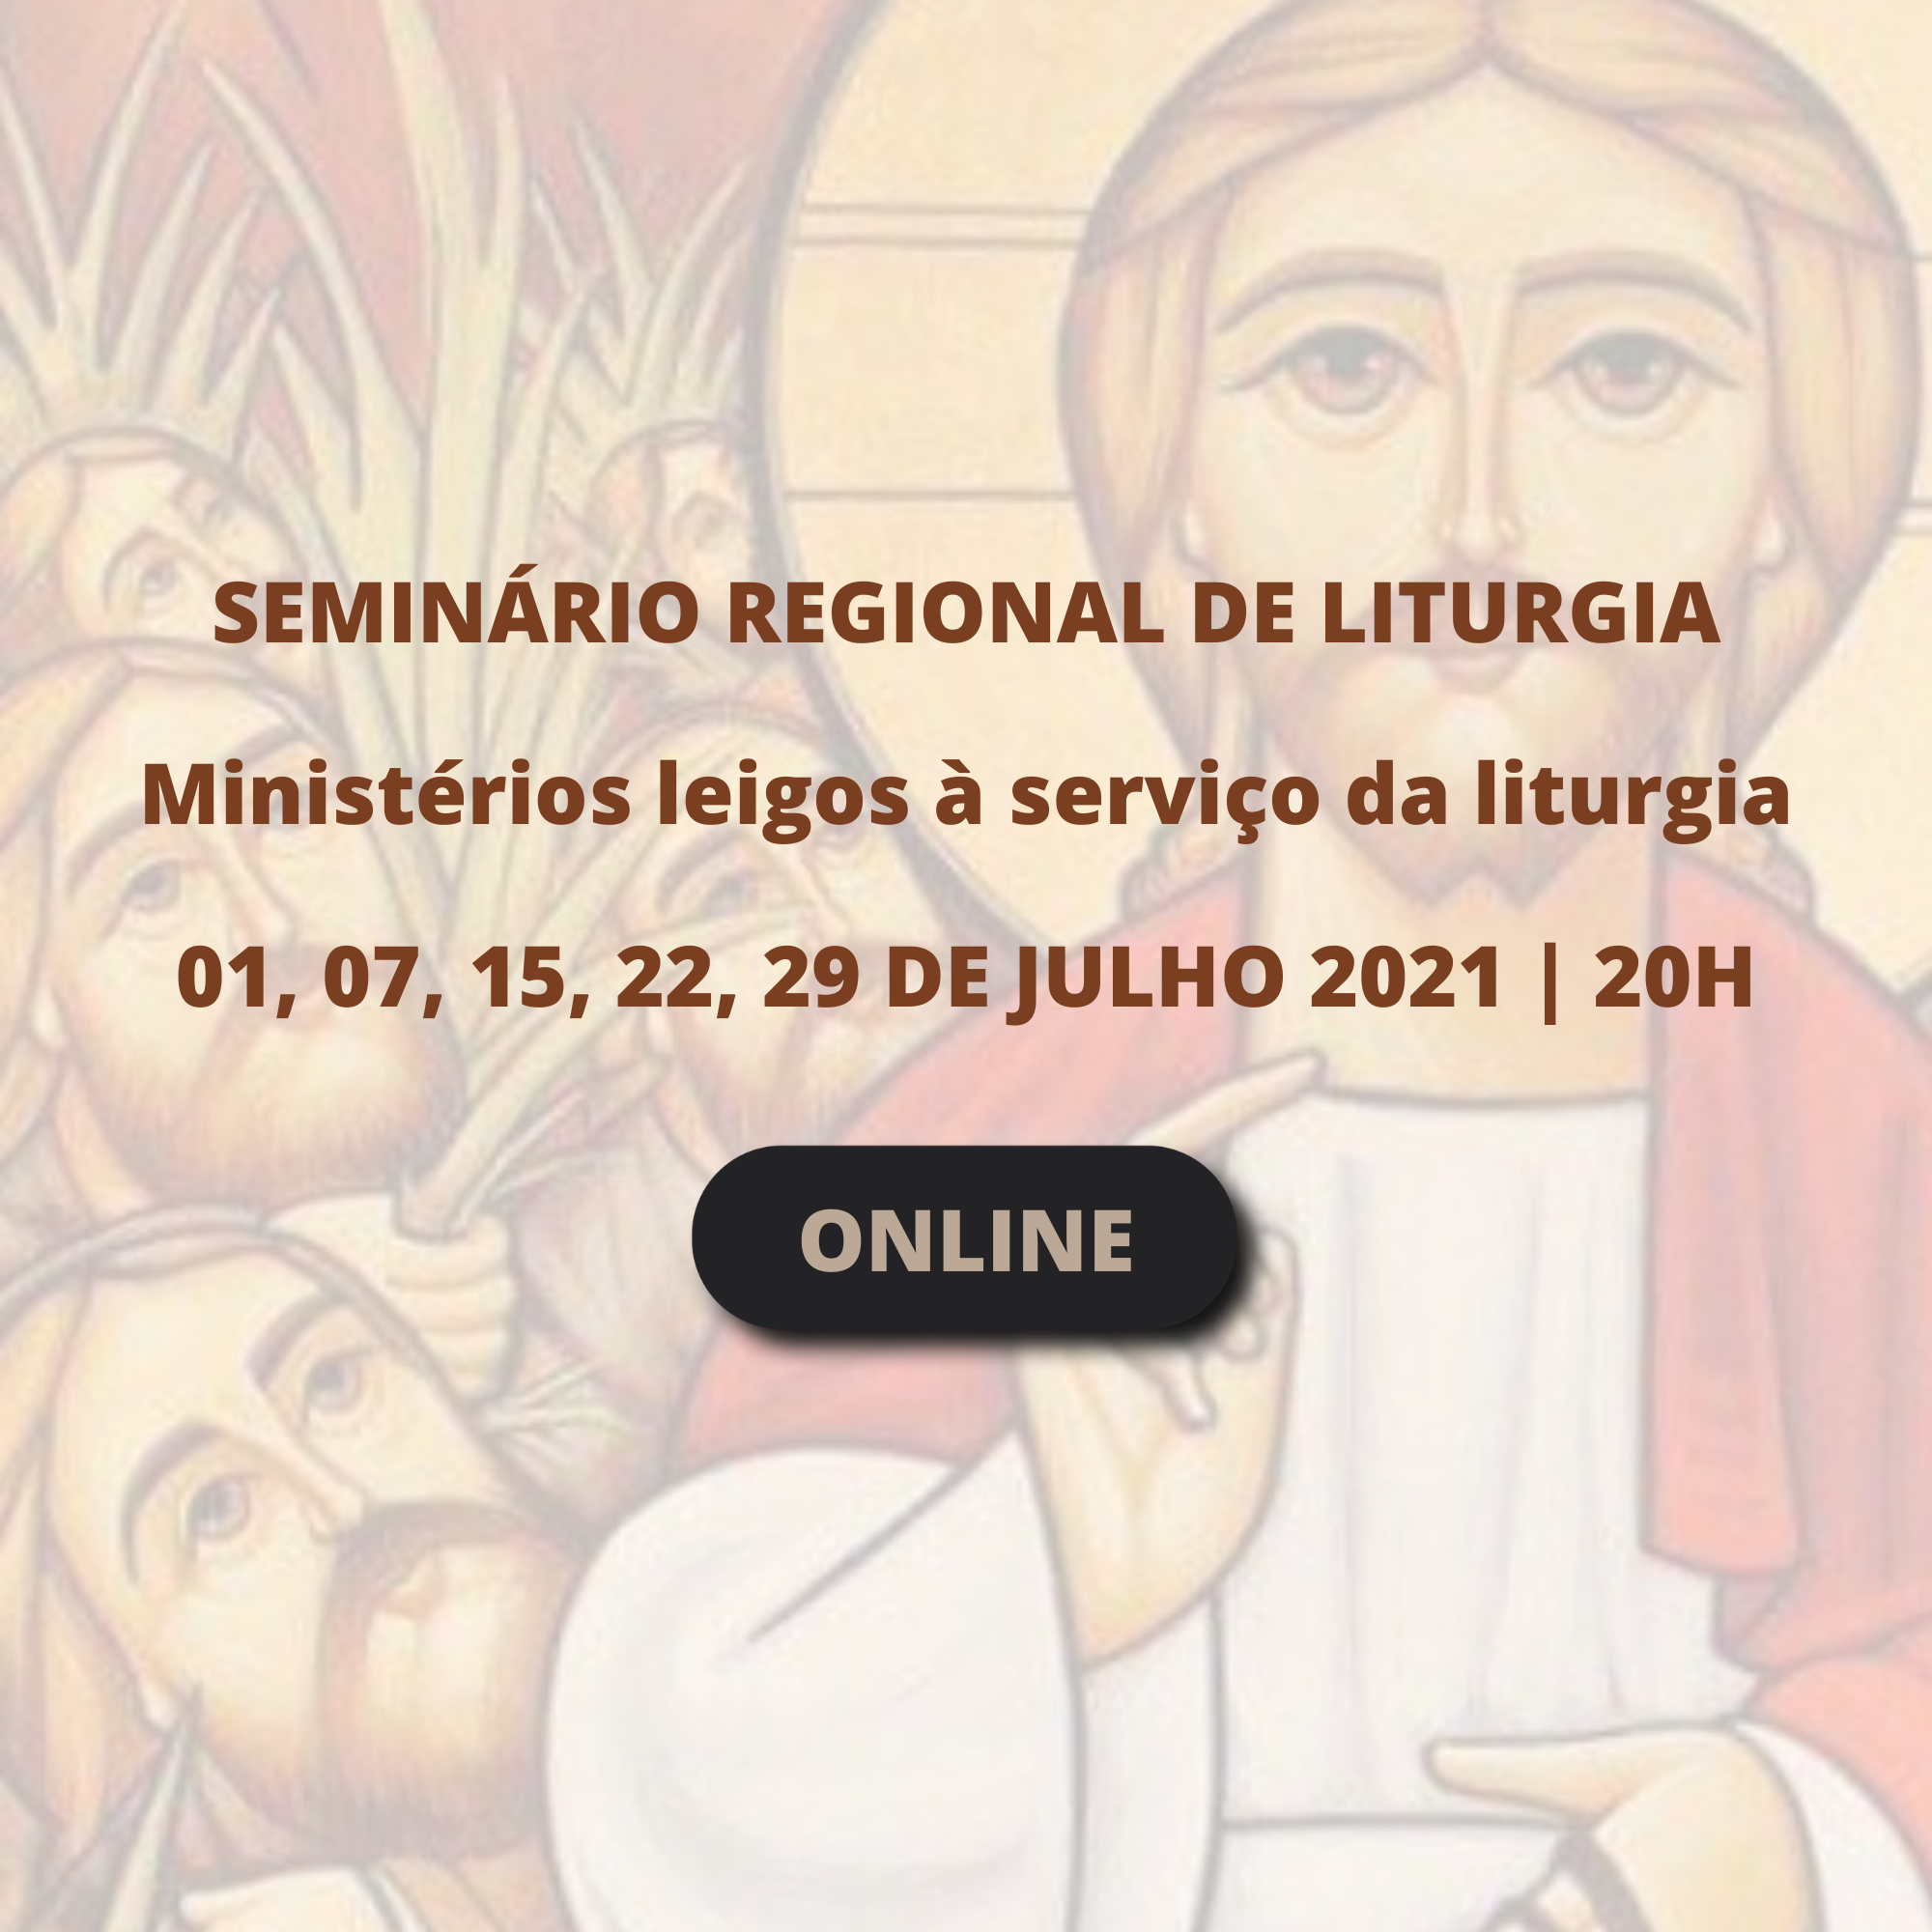 IGMR, PDF, Missa (liturgia)